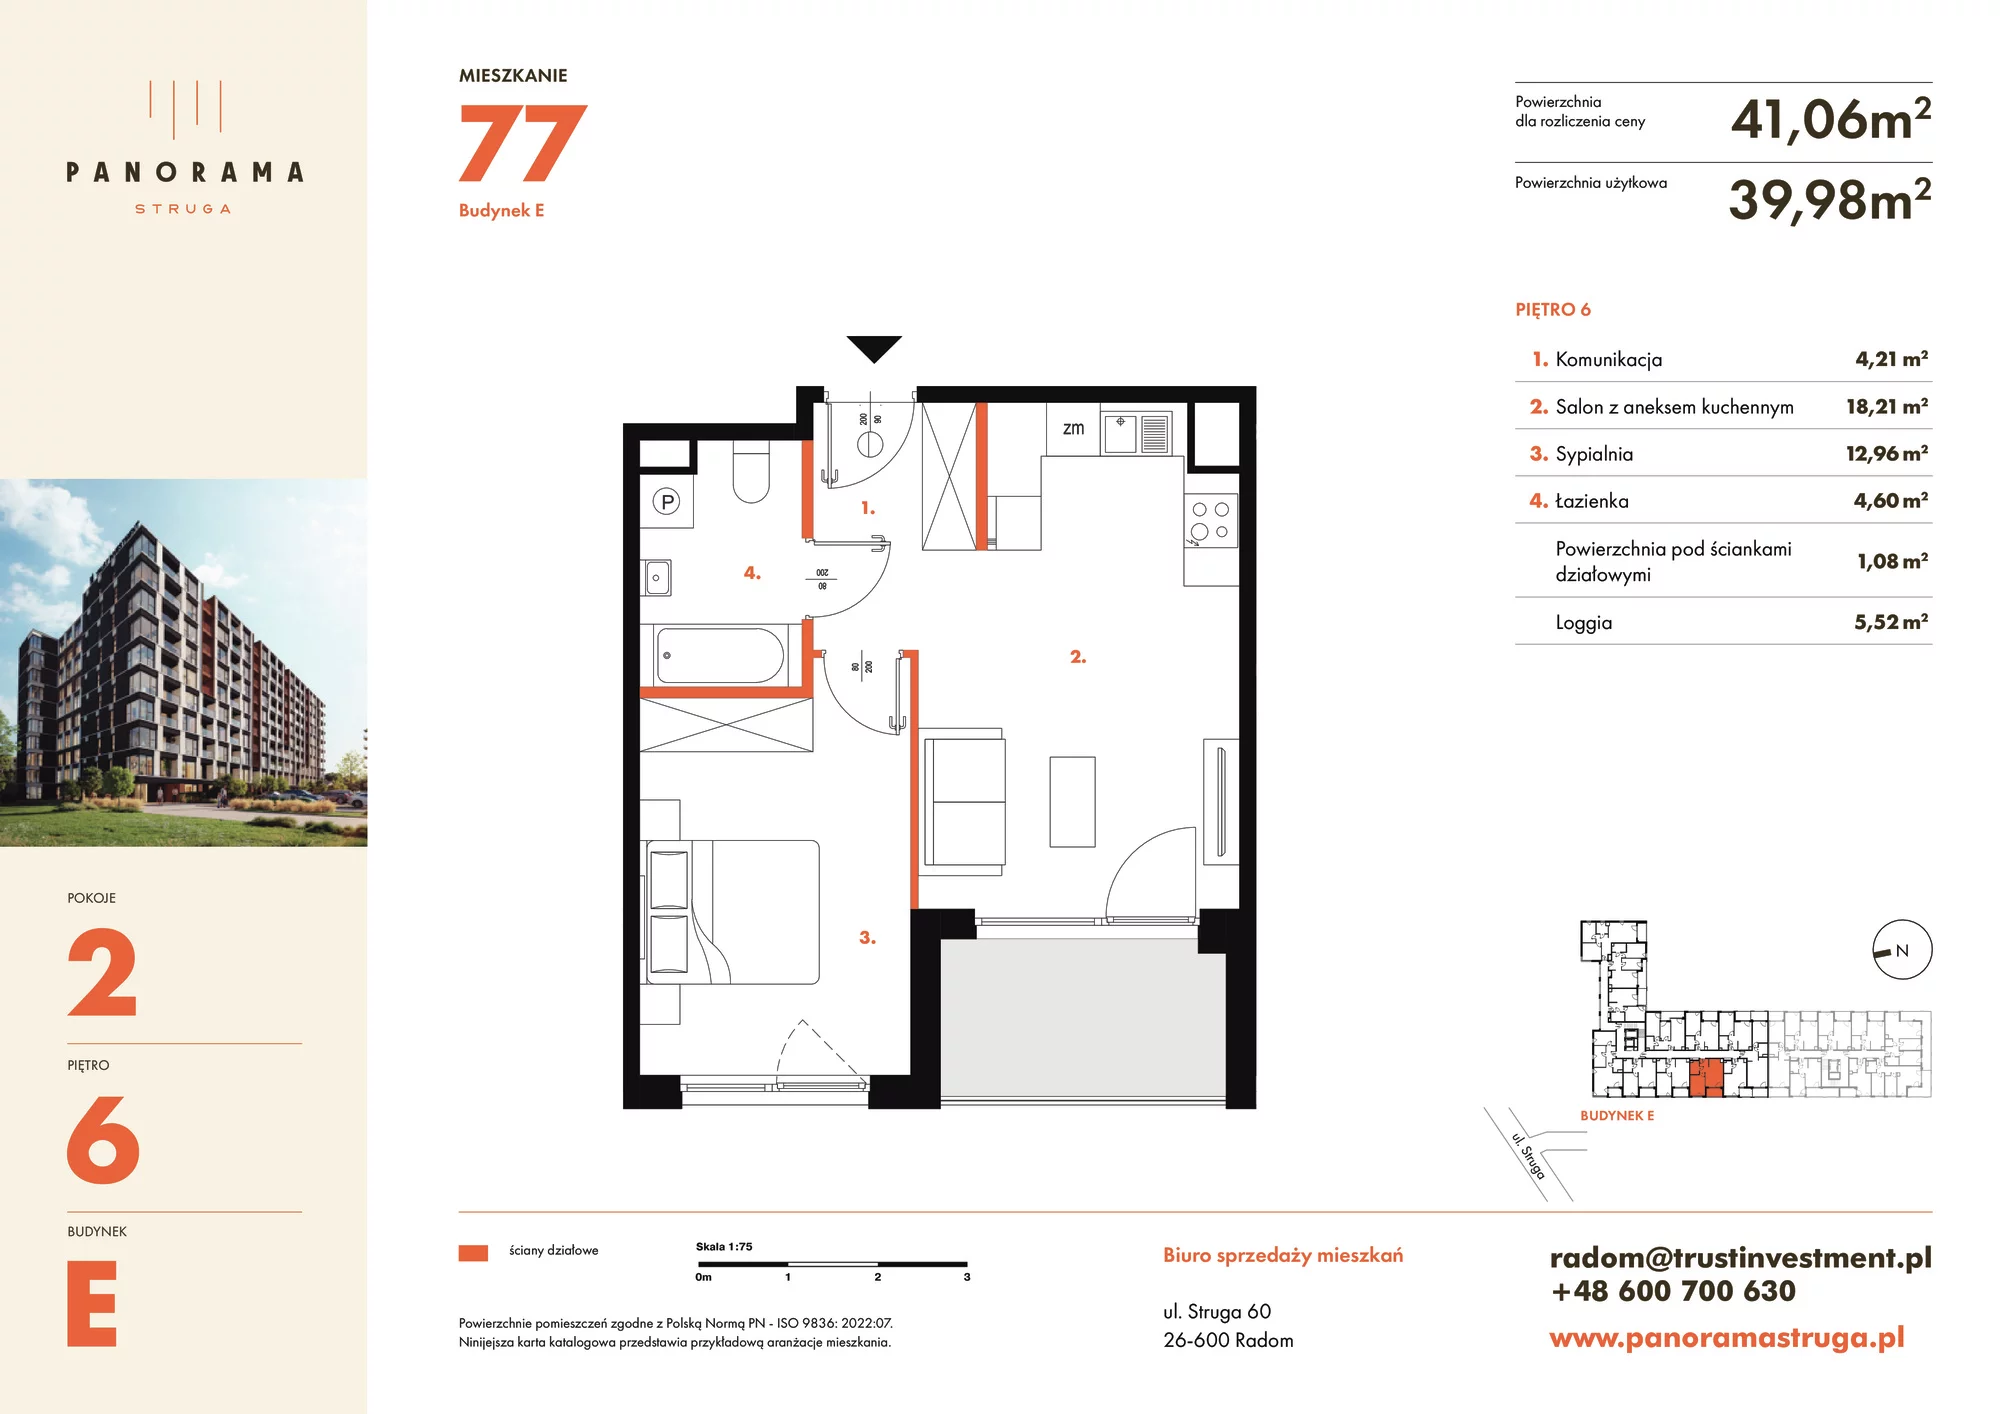 Mieszkanie 41,06 m², piętro 6, oferta nr E77, Panorama Struga, Radom, Śródmieście, ul. Andrzeja Struga 60